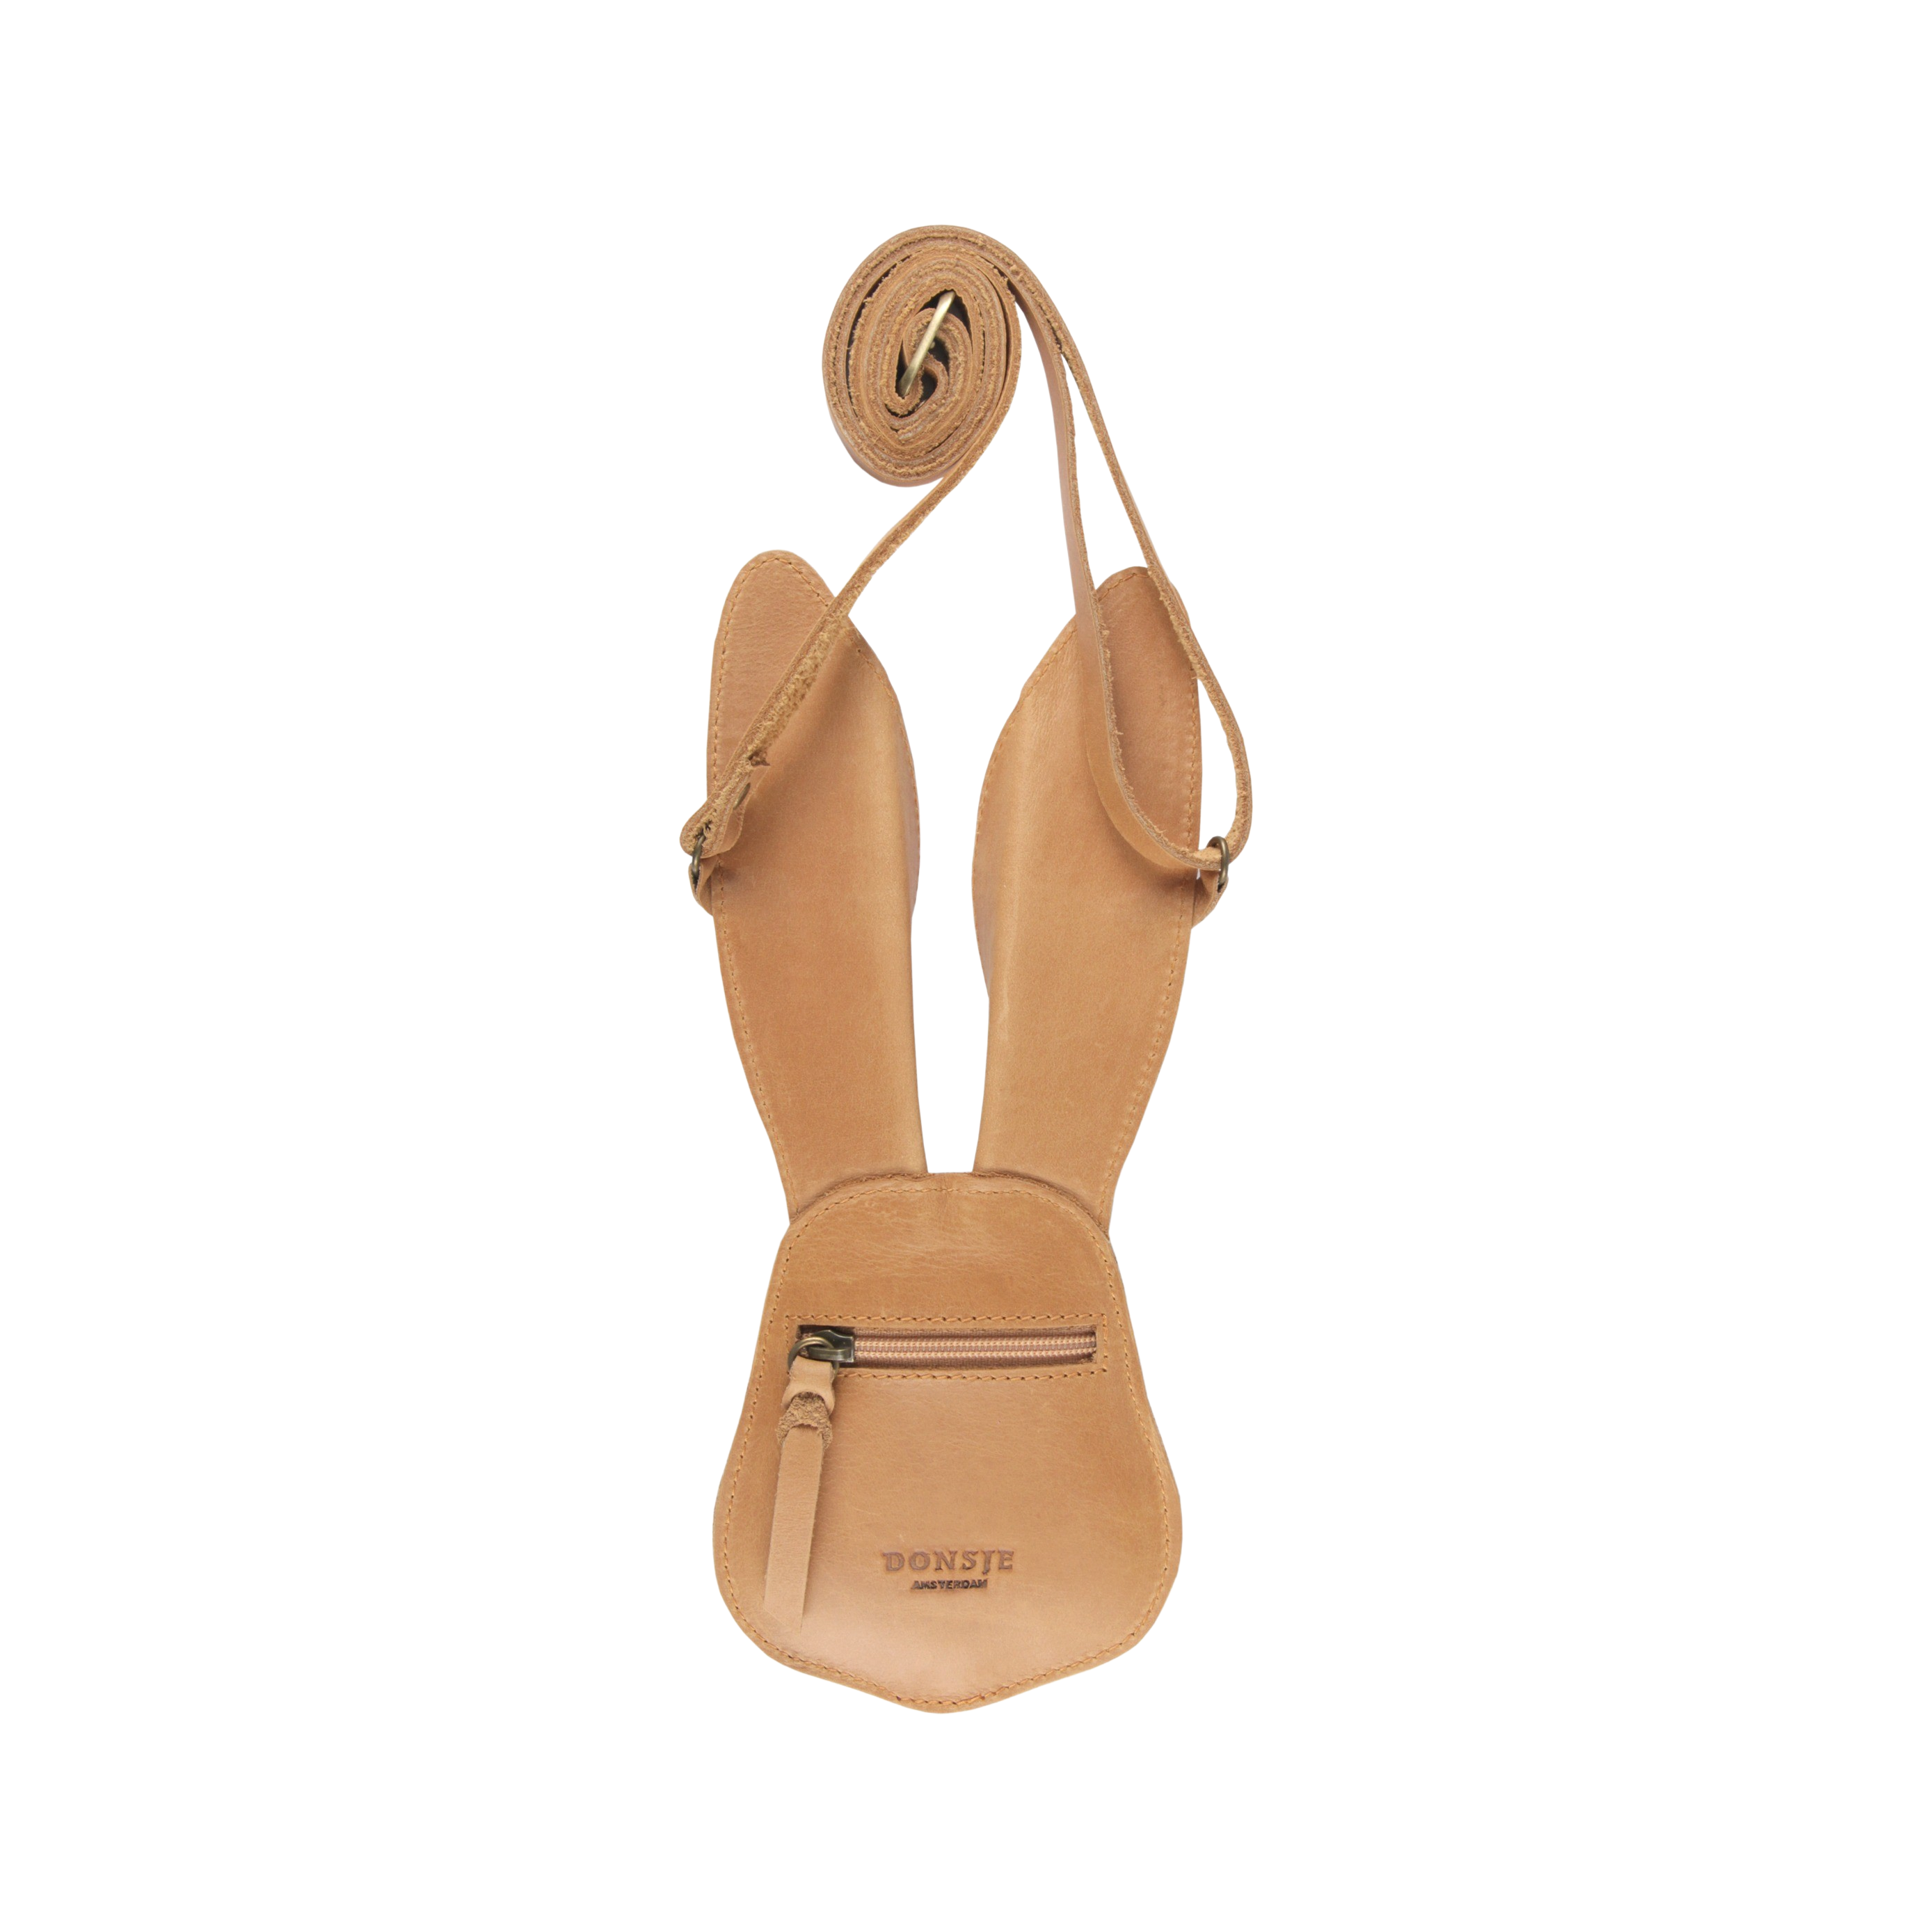 Britta Exclusive Purse | Hare | Camel Classic Leather